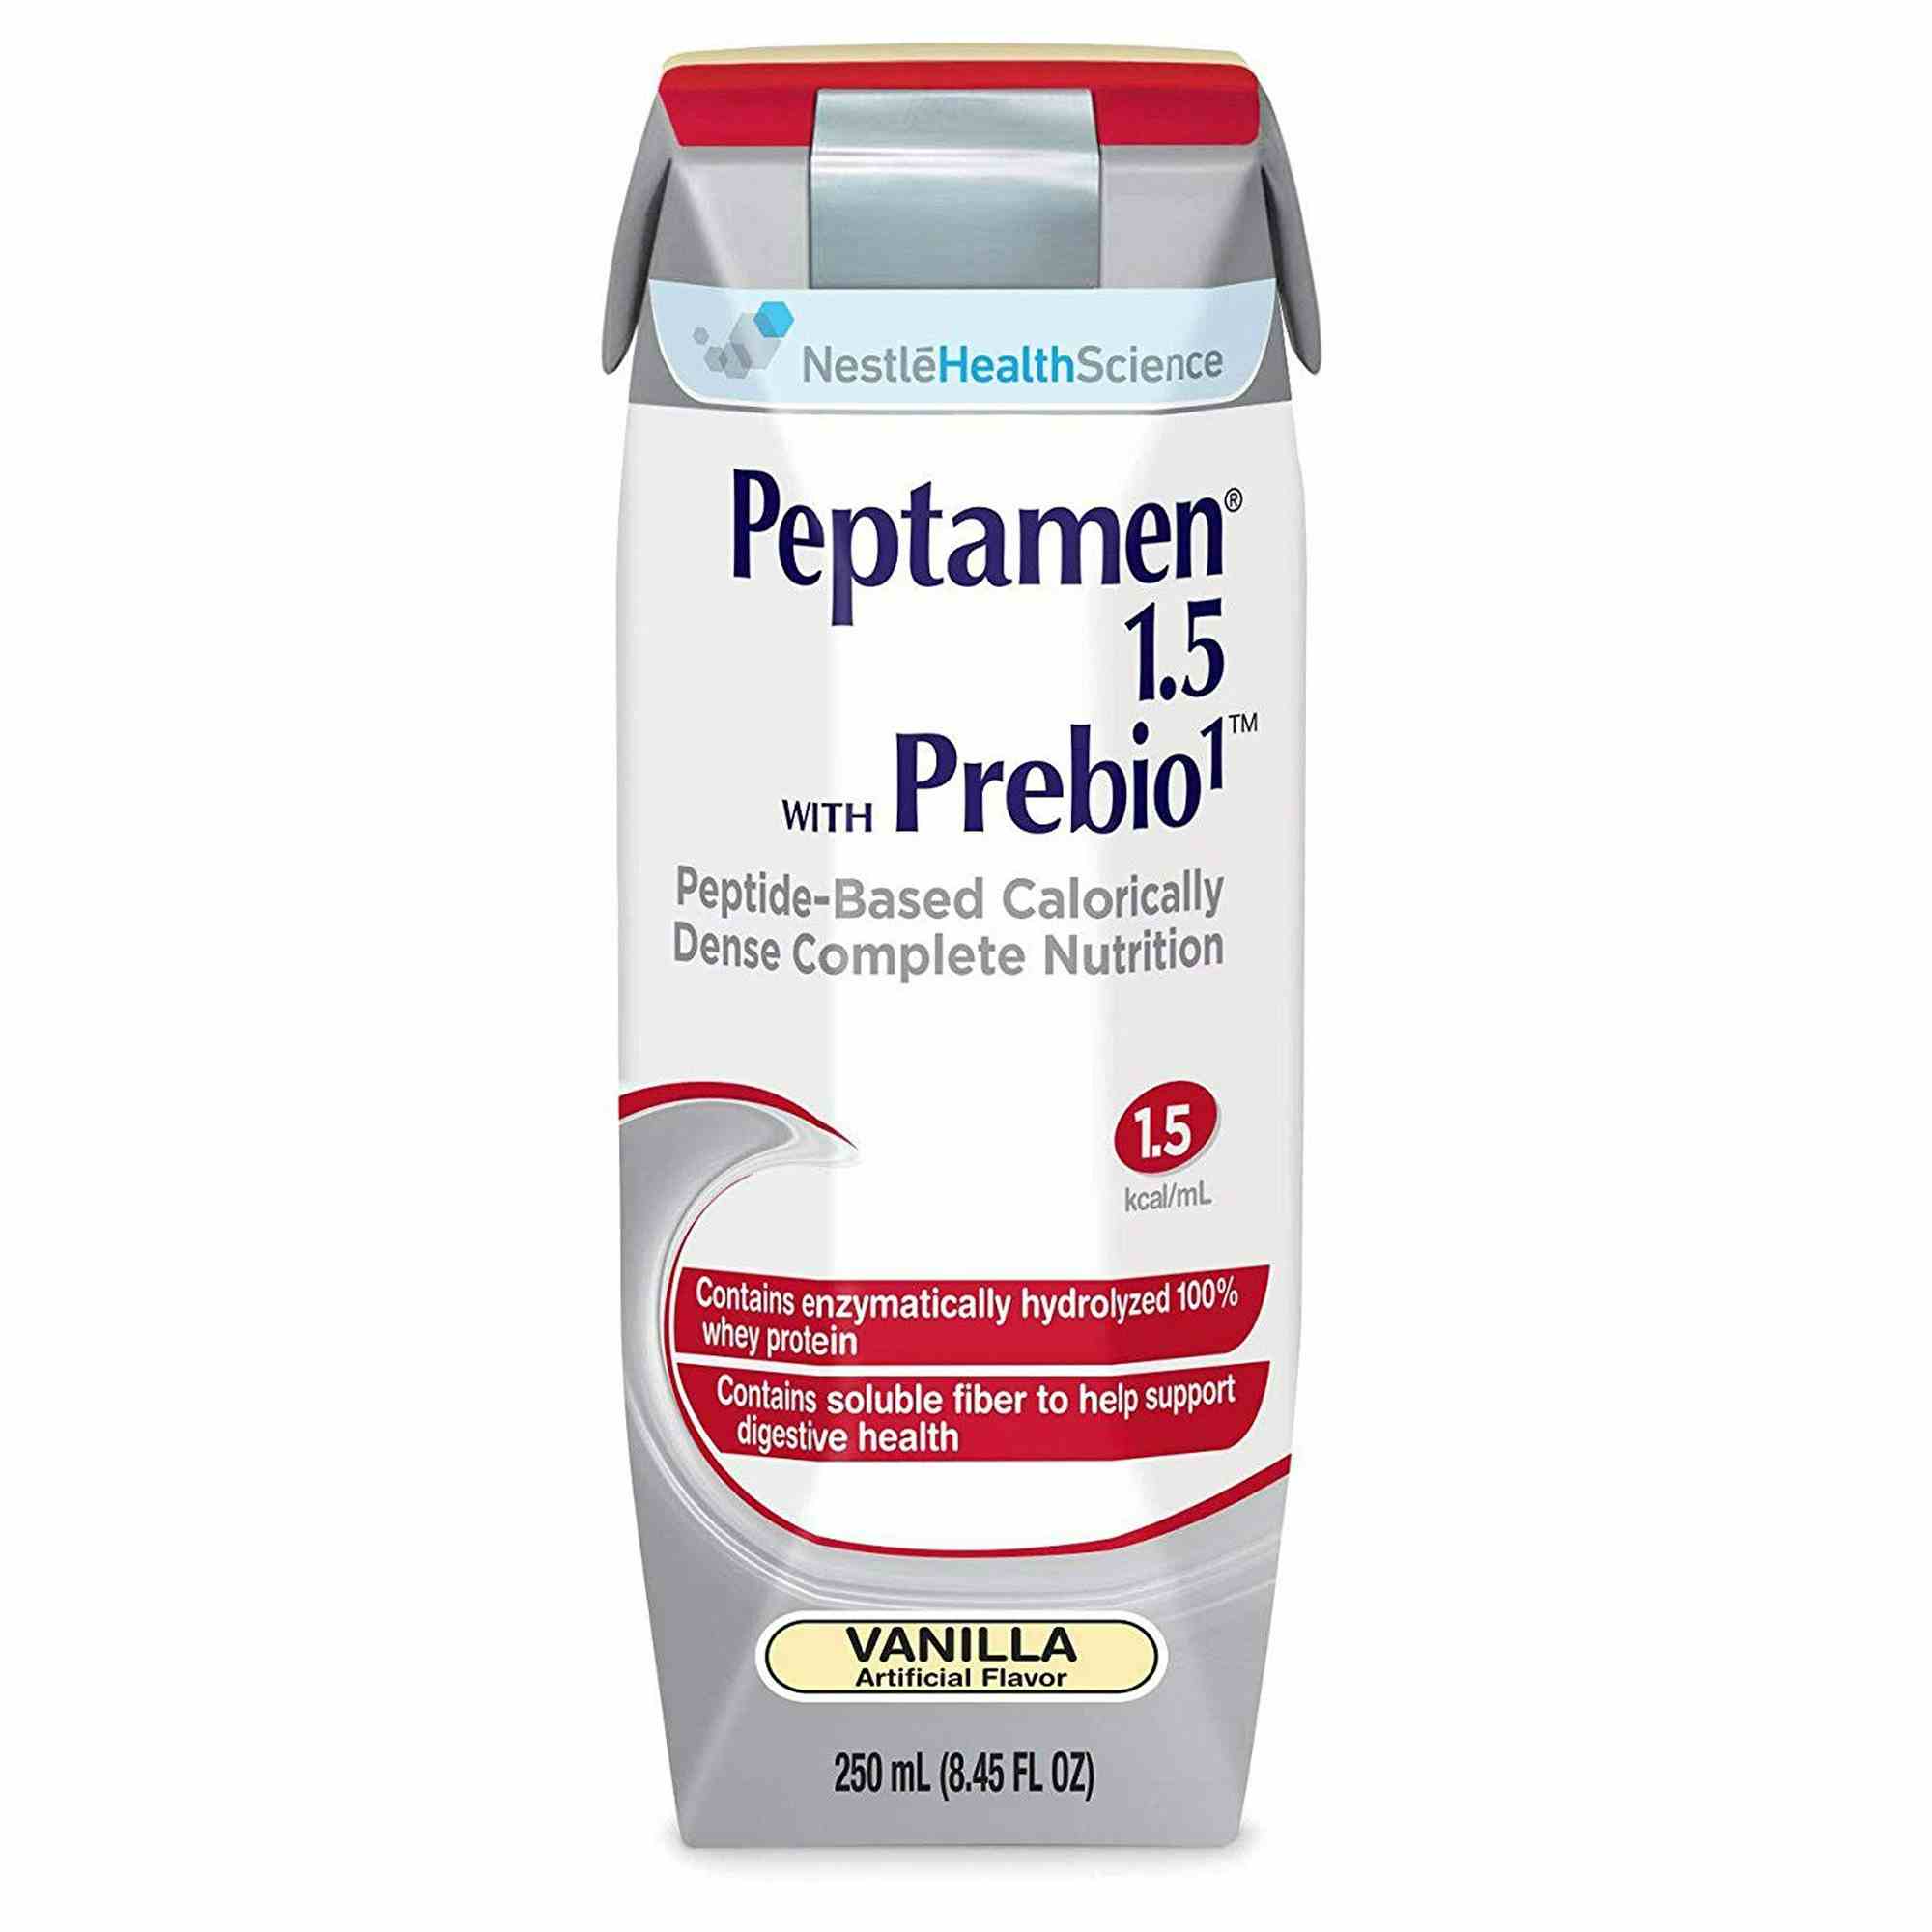 Nestle HealthScience Peptamen 1.5 with Prebio 1 Peptide-Based Calorically Dense Complete Nutrition Tube Feeding Formula, Vanilla, 250 mL, 10043900349586, 1 Each